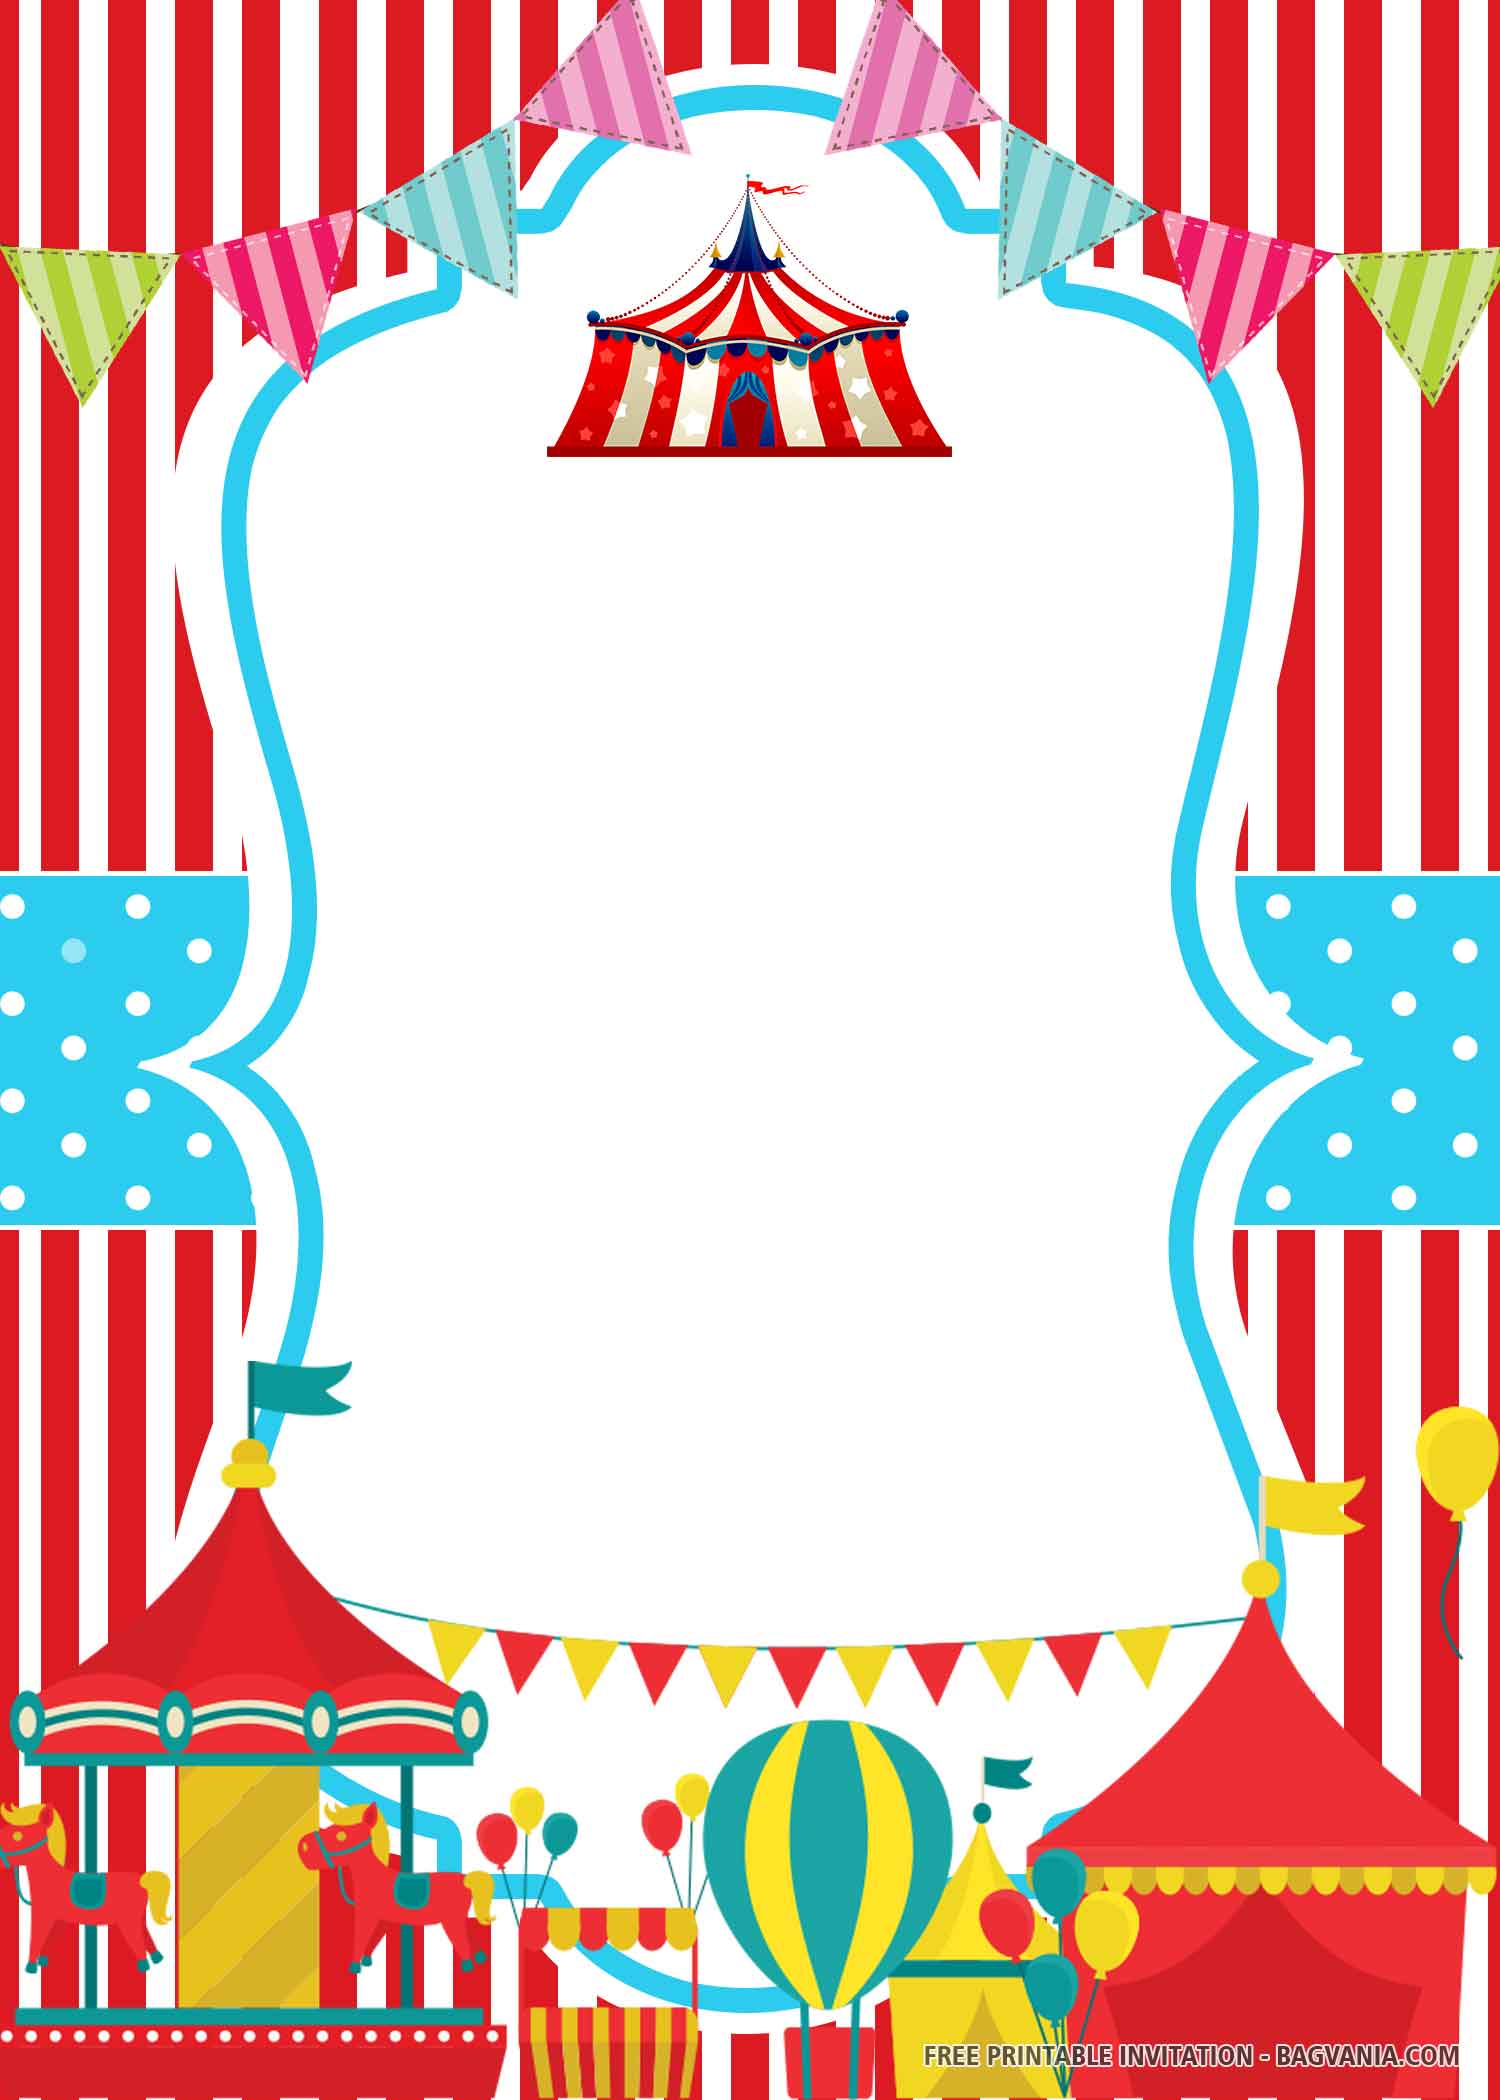 FREE Stripes Circus with Tents, Ribbons, Air Balloon, Balloons